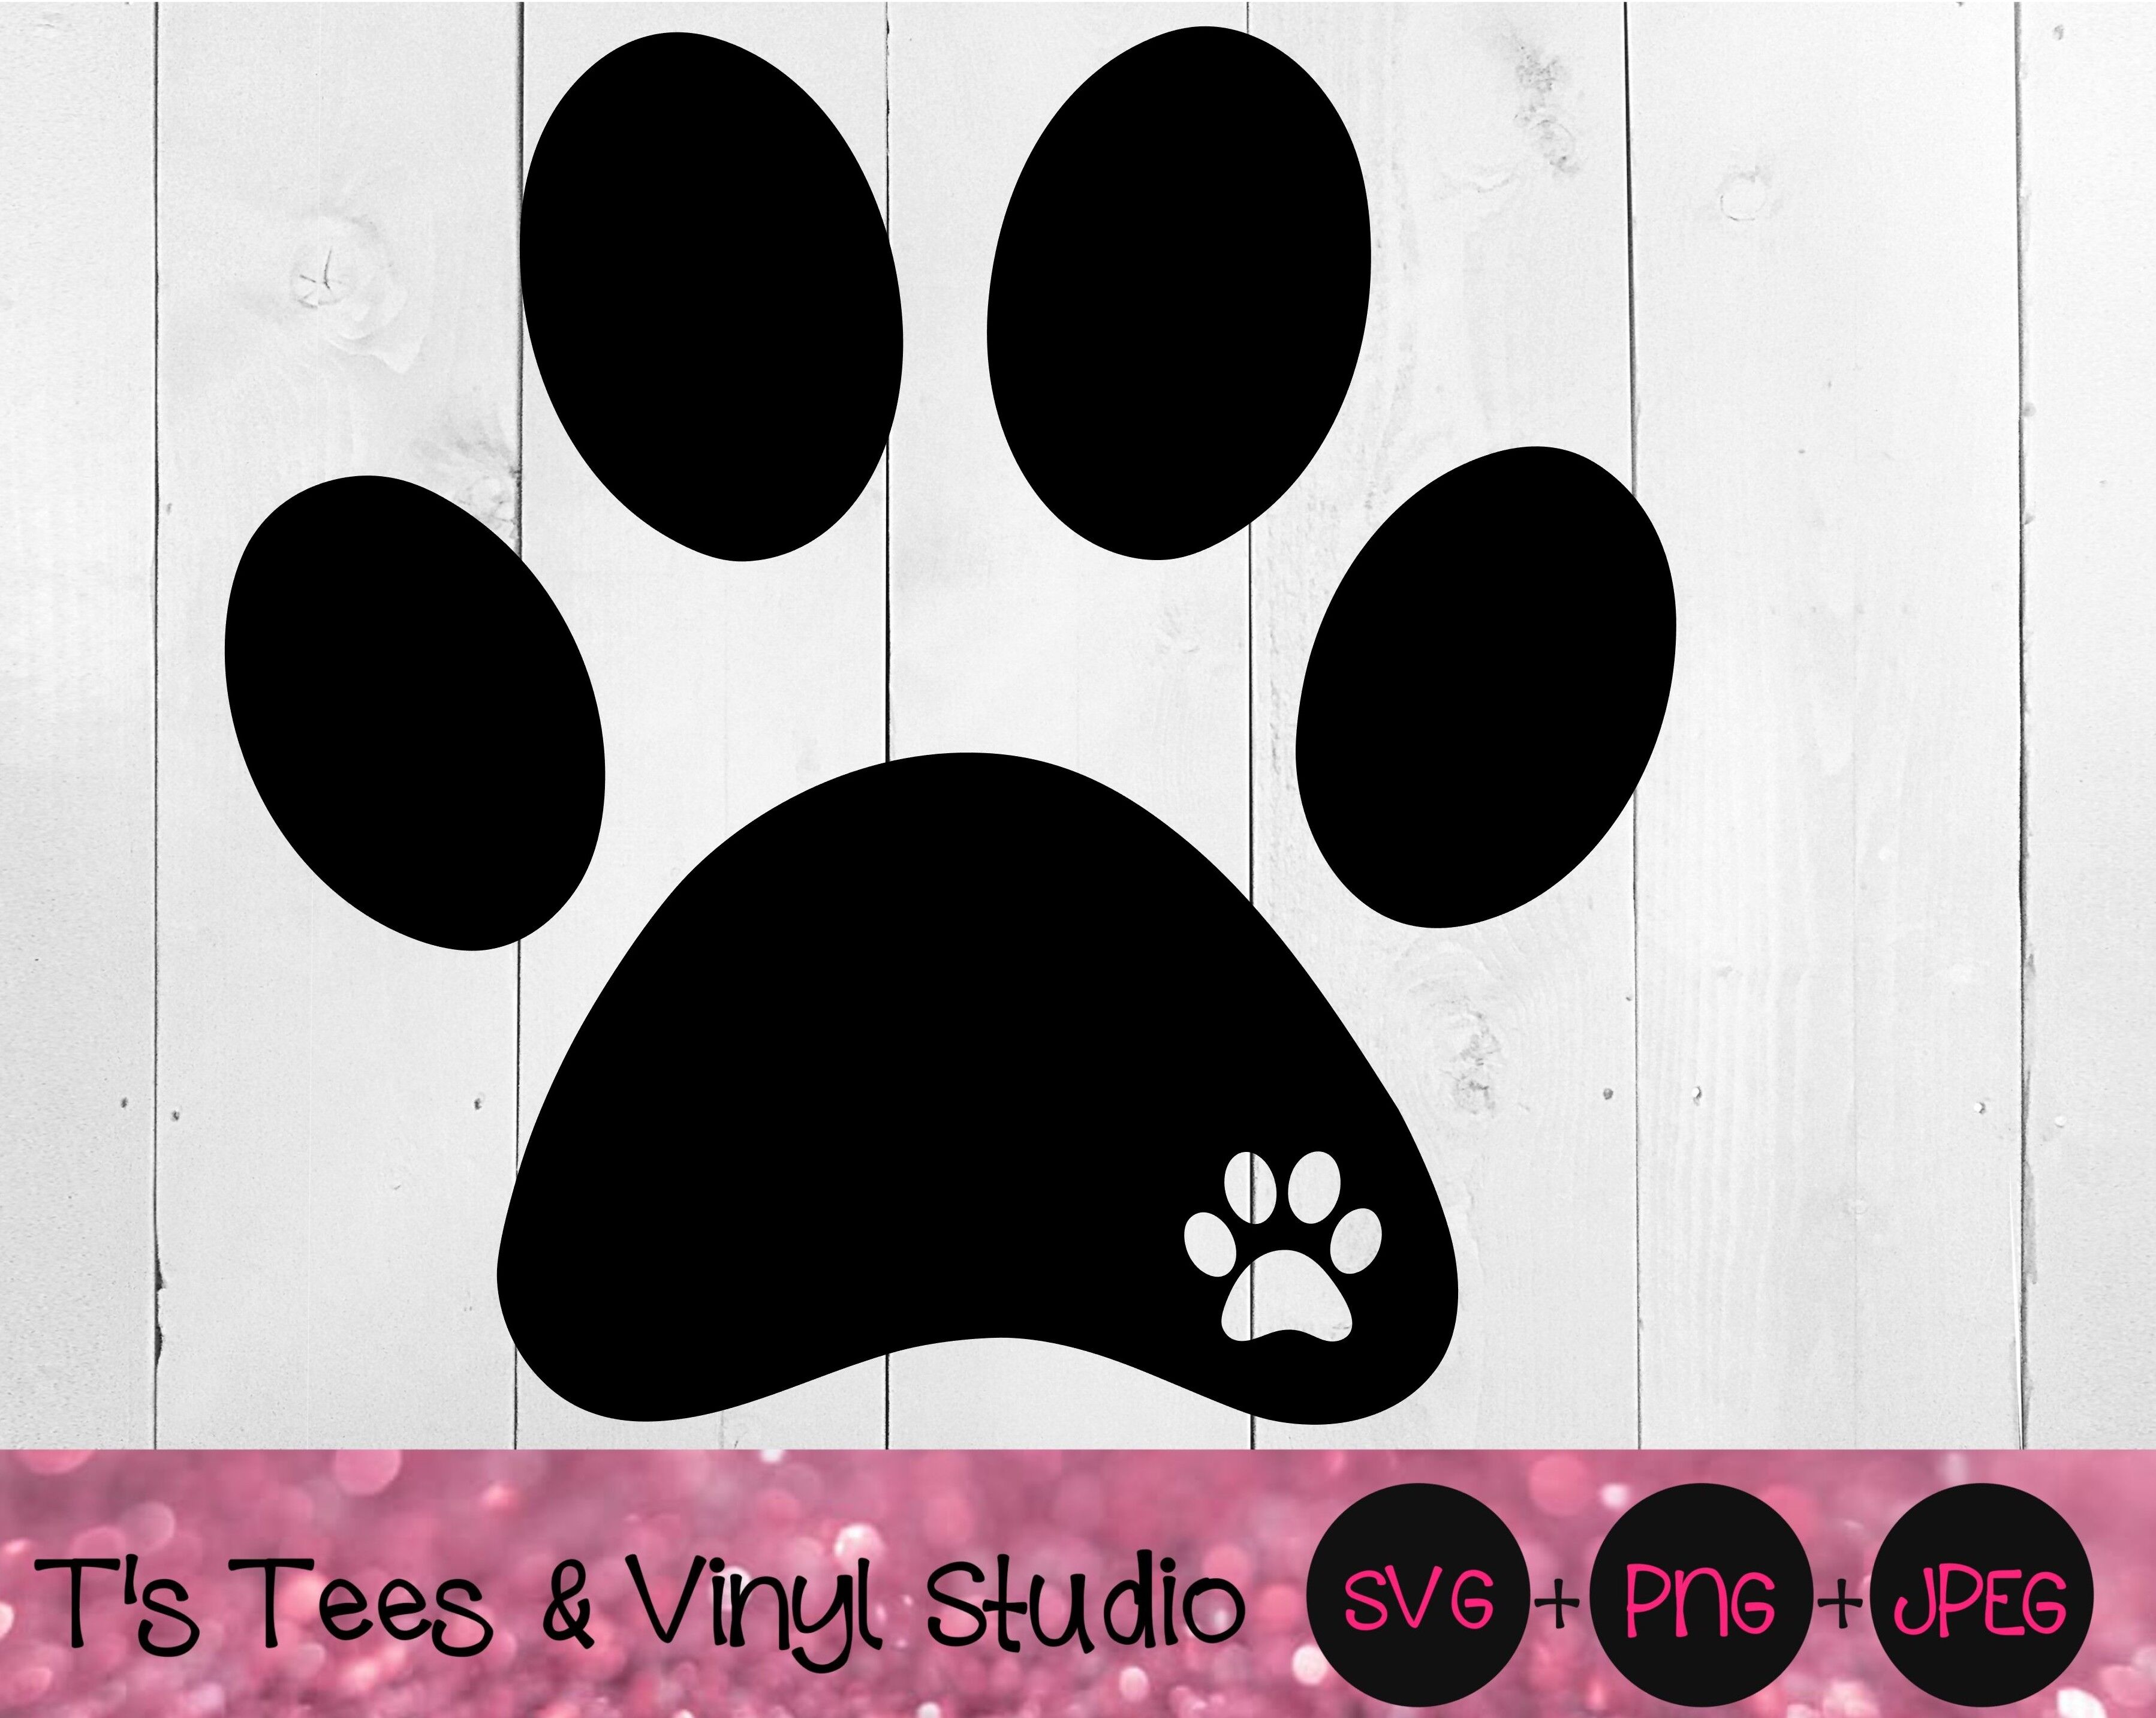 Download Paw Svg Paw Print Svg Dog Svg Puppy Svg Puppy Print Svg Dog Print By T S Tees Vinyl Studio Thehungryjpeg Com SVG, PNG, EPS, DXF File